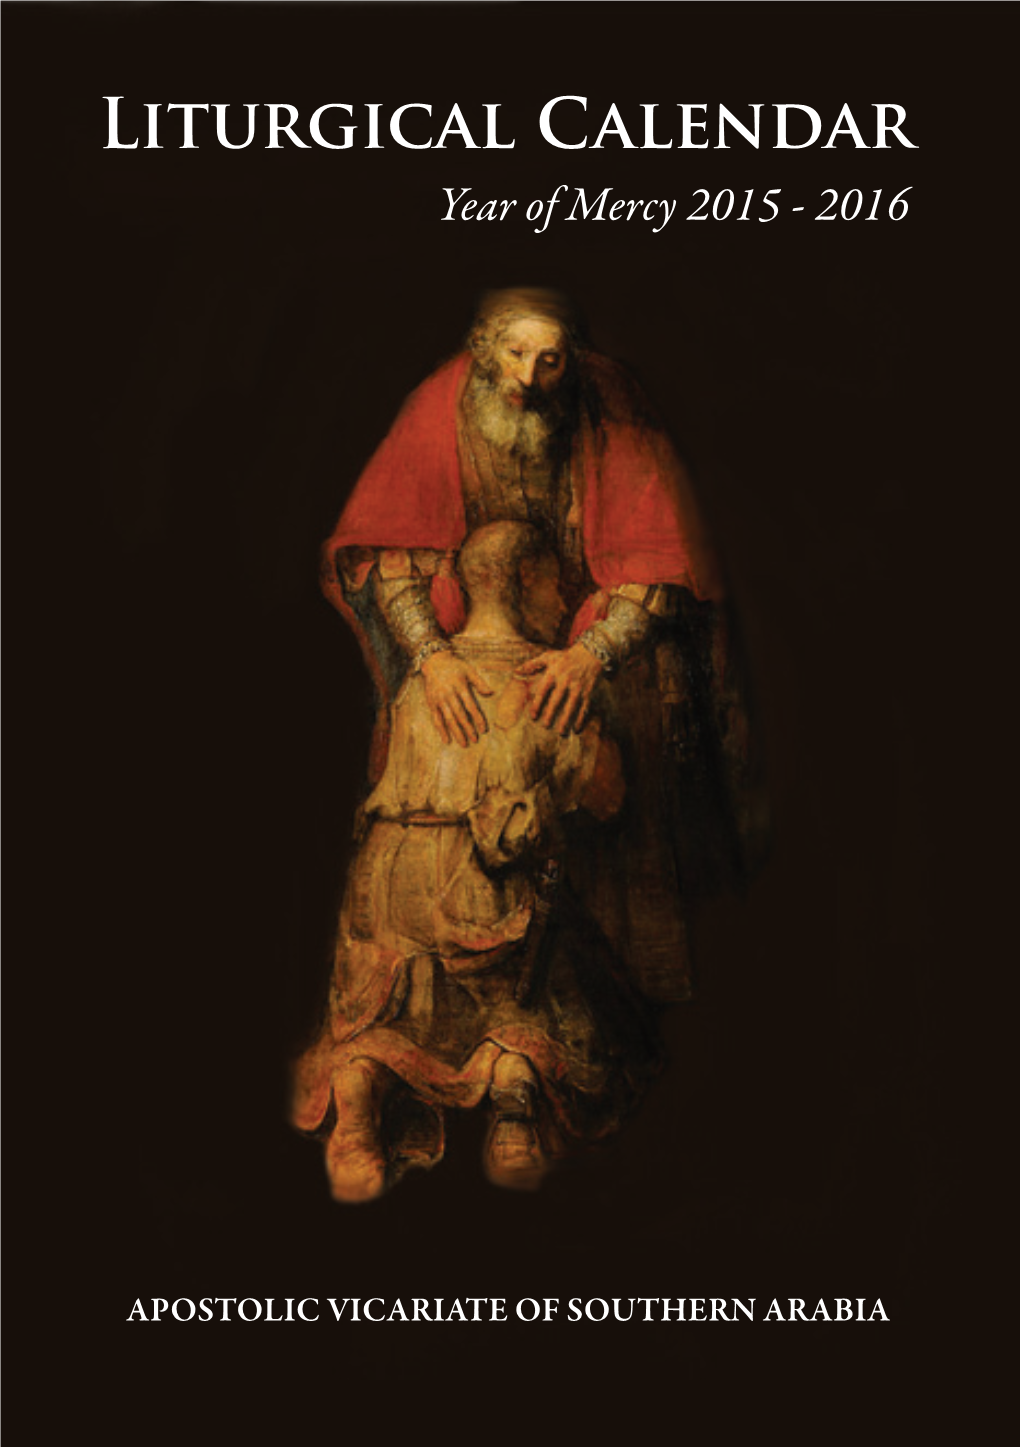 Liturgical Calendar Year of Mercy 2015 - 2016